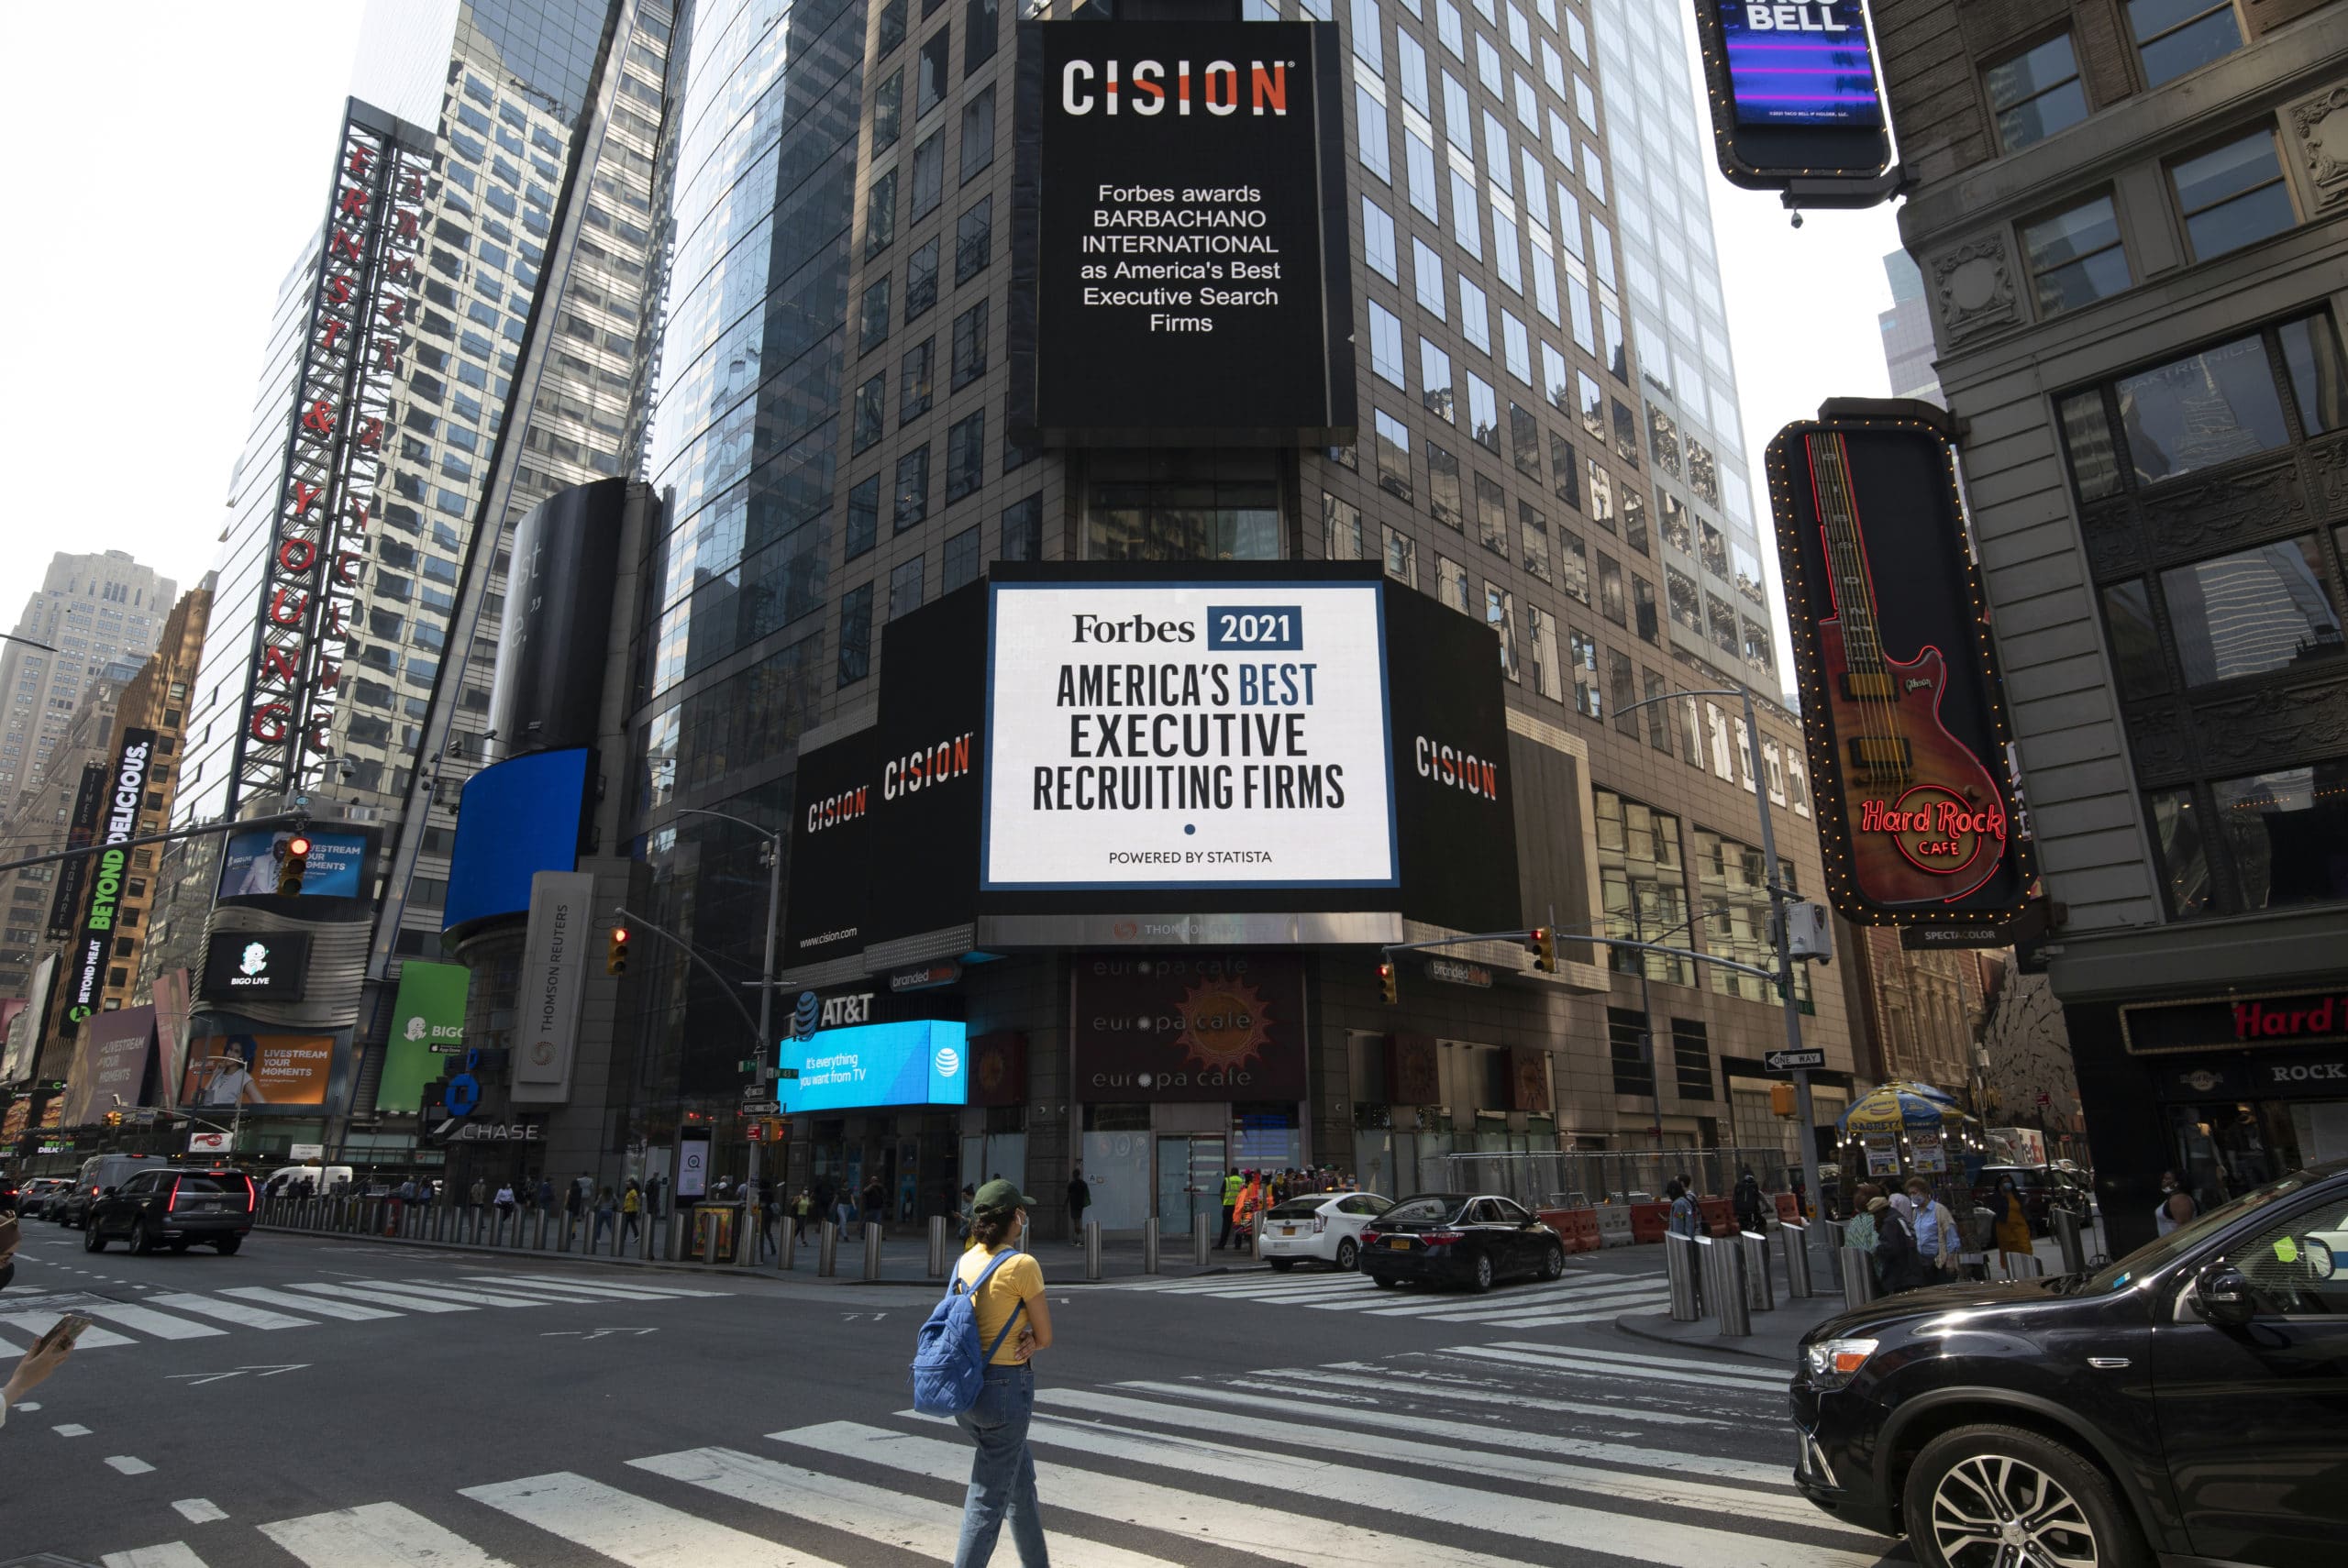 Barbachano at Time Square | Executive Recruiting